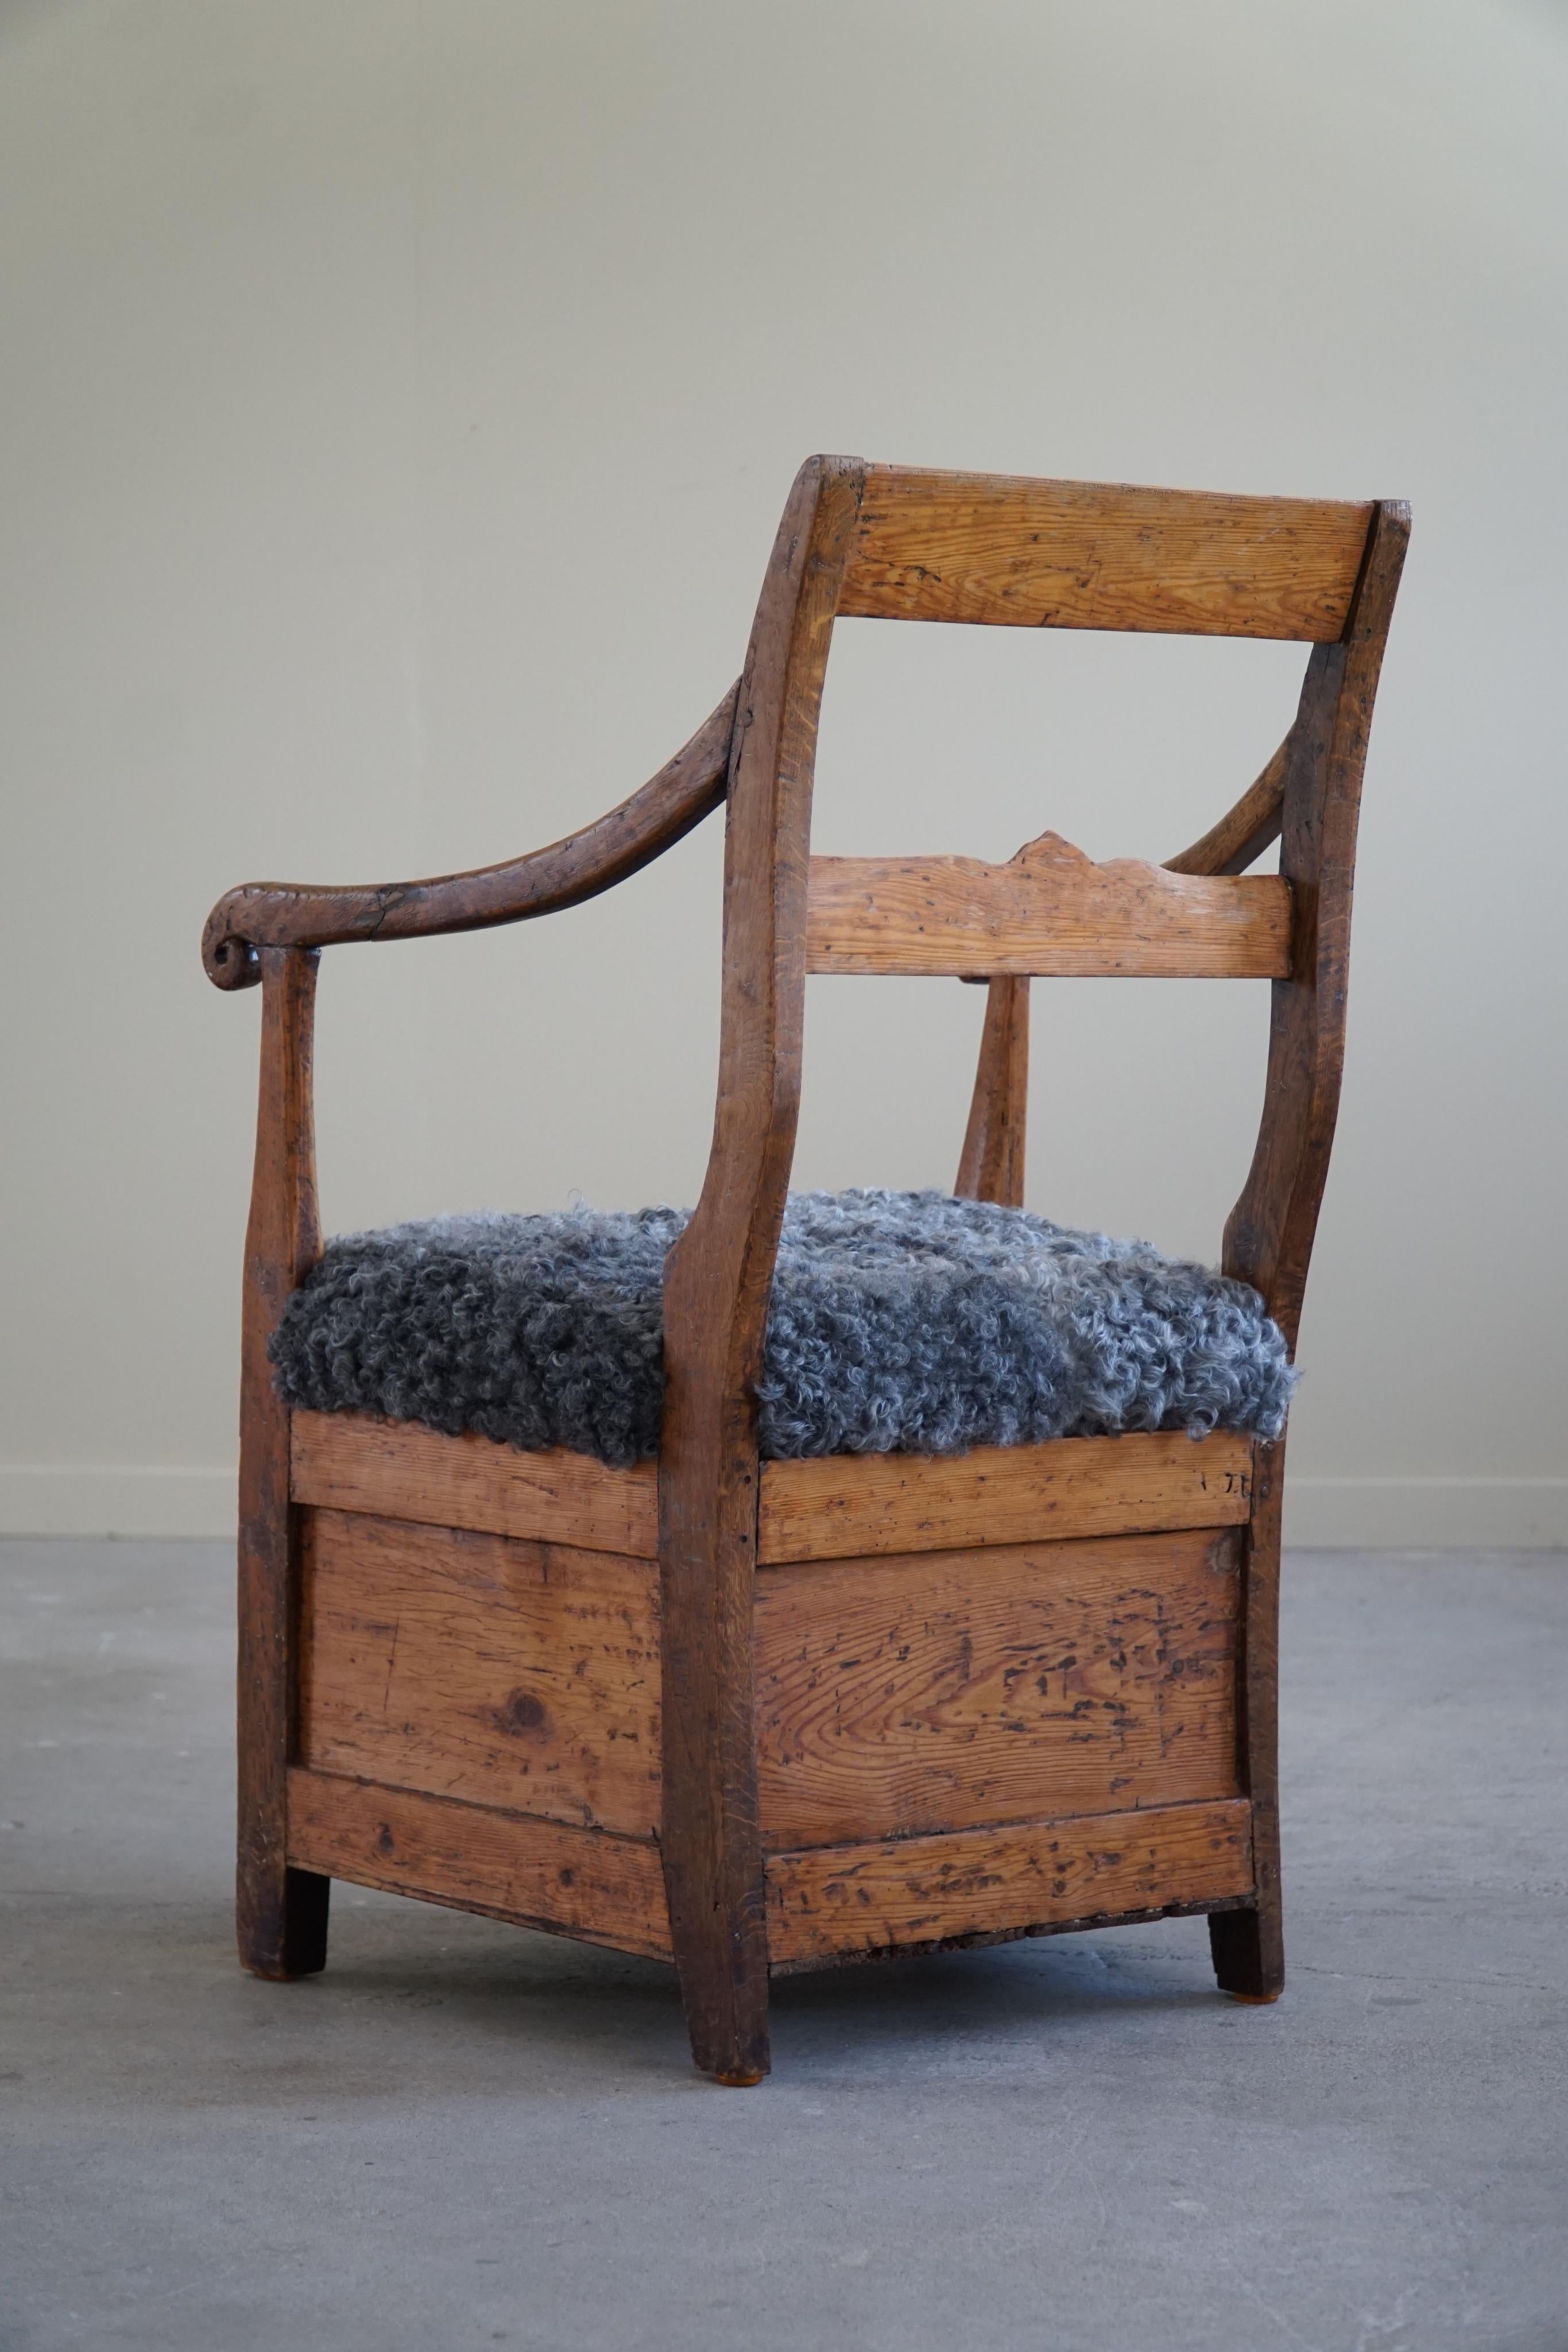 Danish Folk Art Armchair in Solid Oak & Gotland Sheepskin, Mid 19th Century For Sale 2